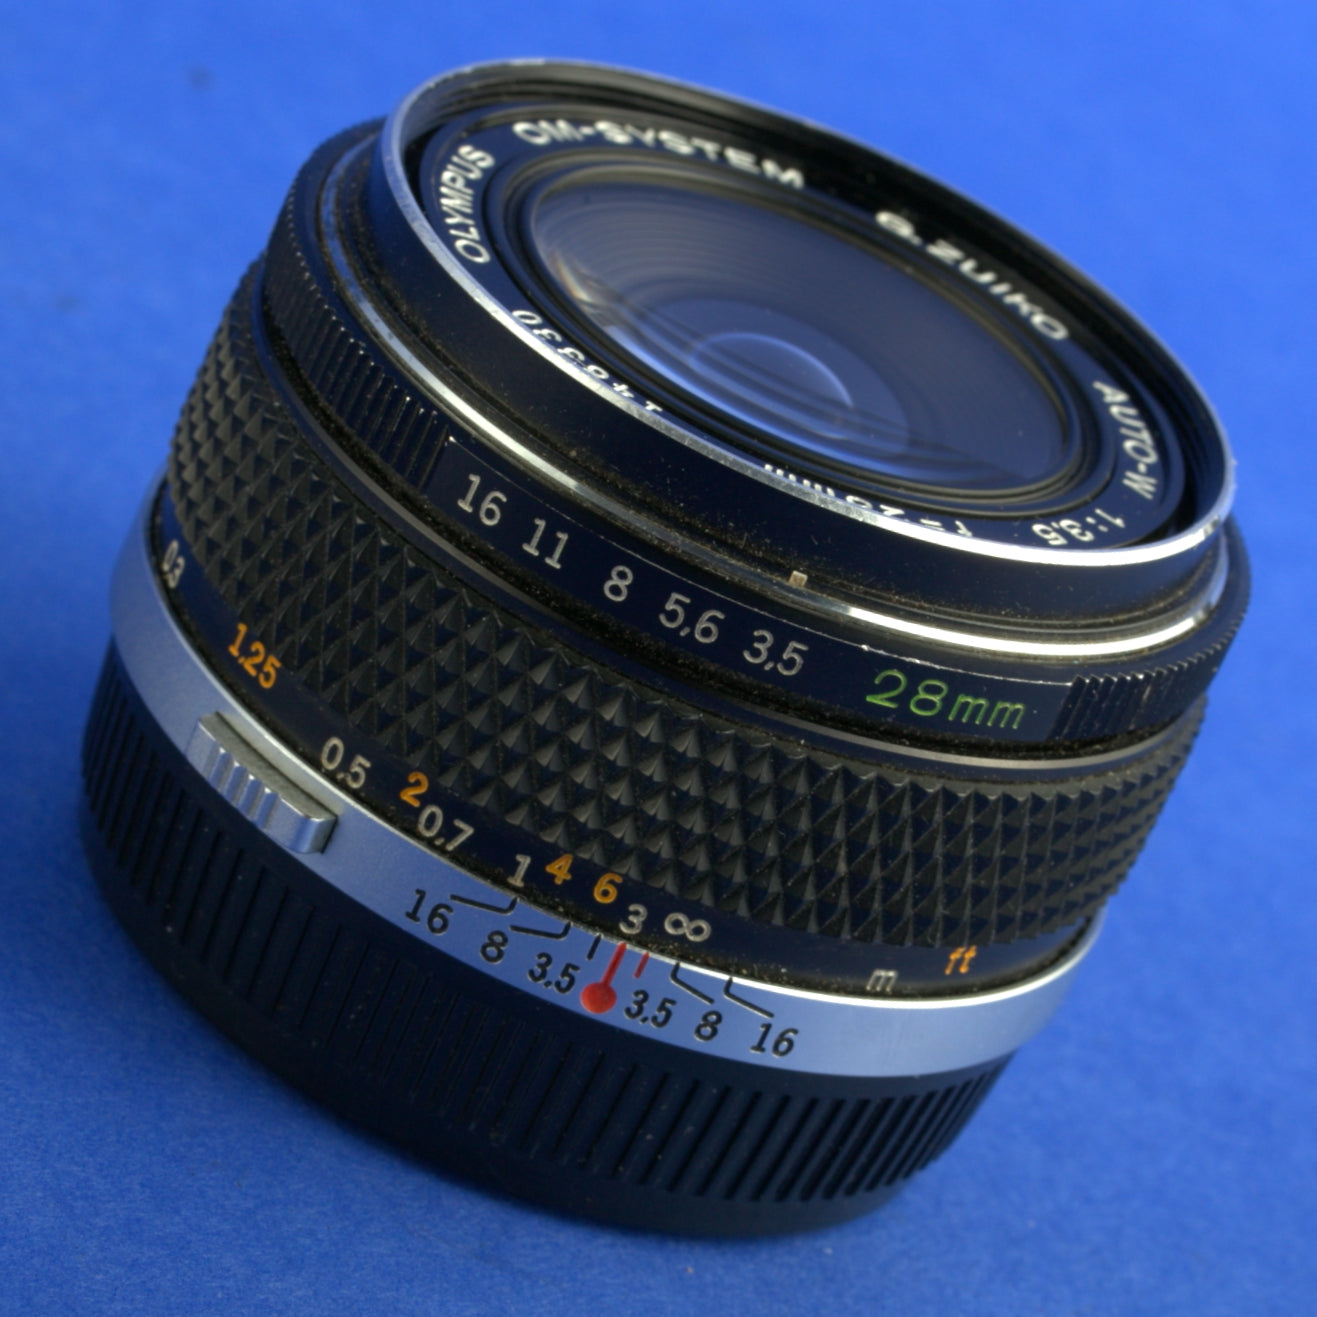 Olympus OM 28mm 3.5 Zuiko Lens